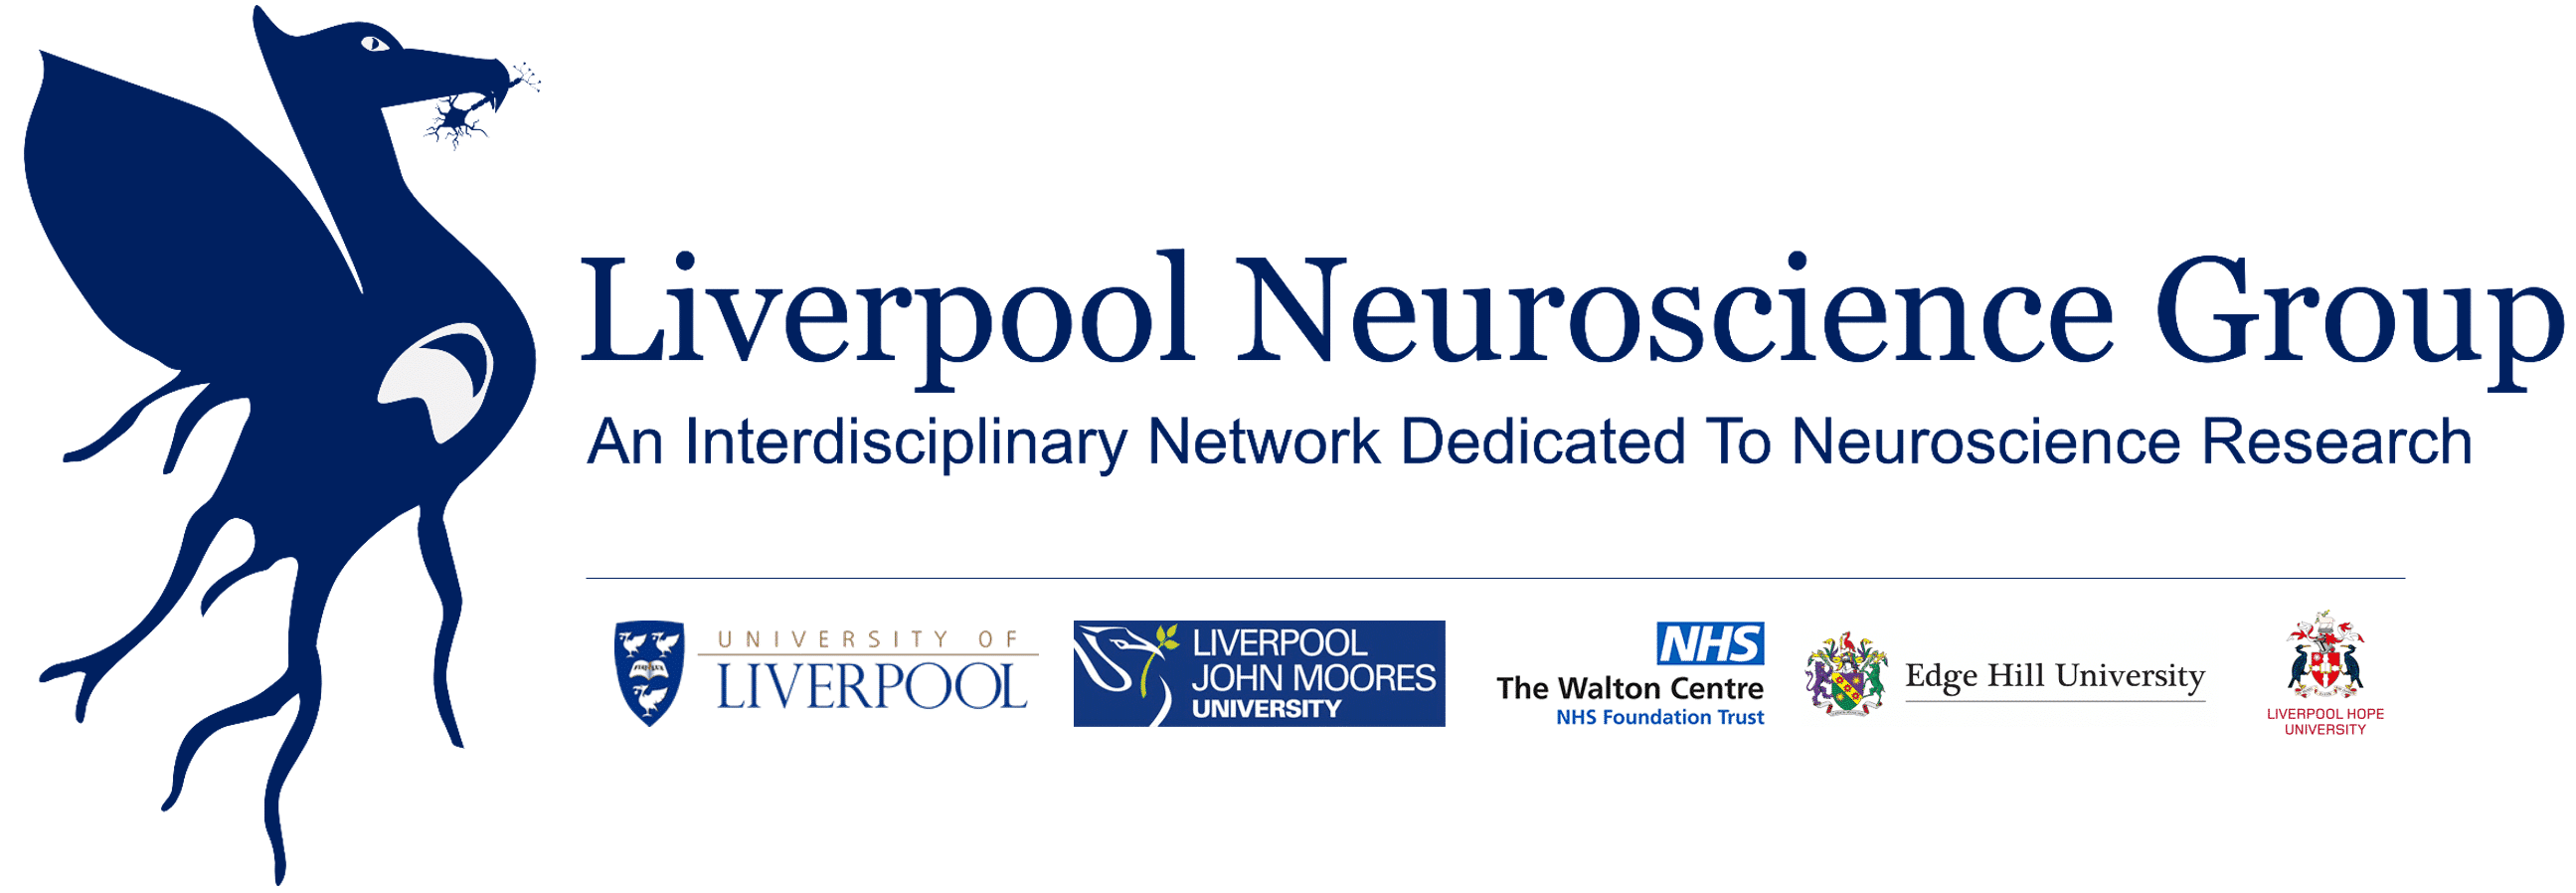 Liverpool Neuroscience Group